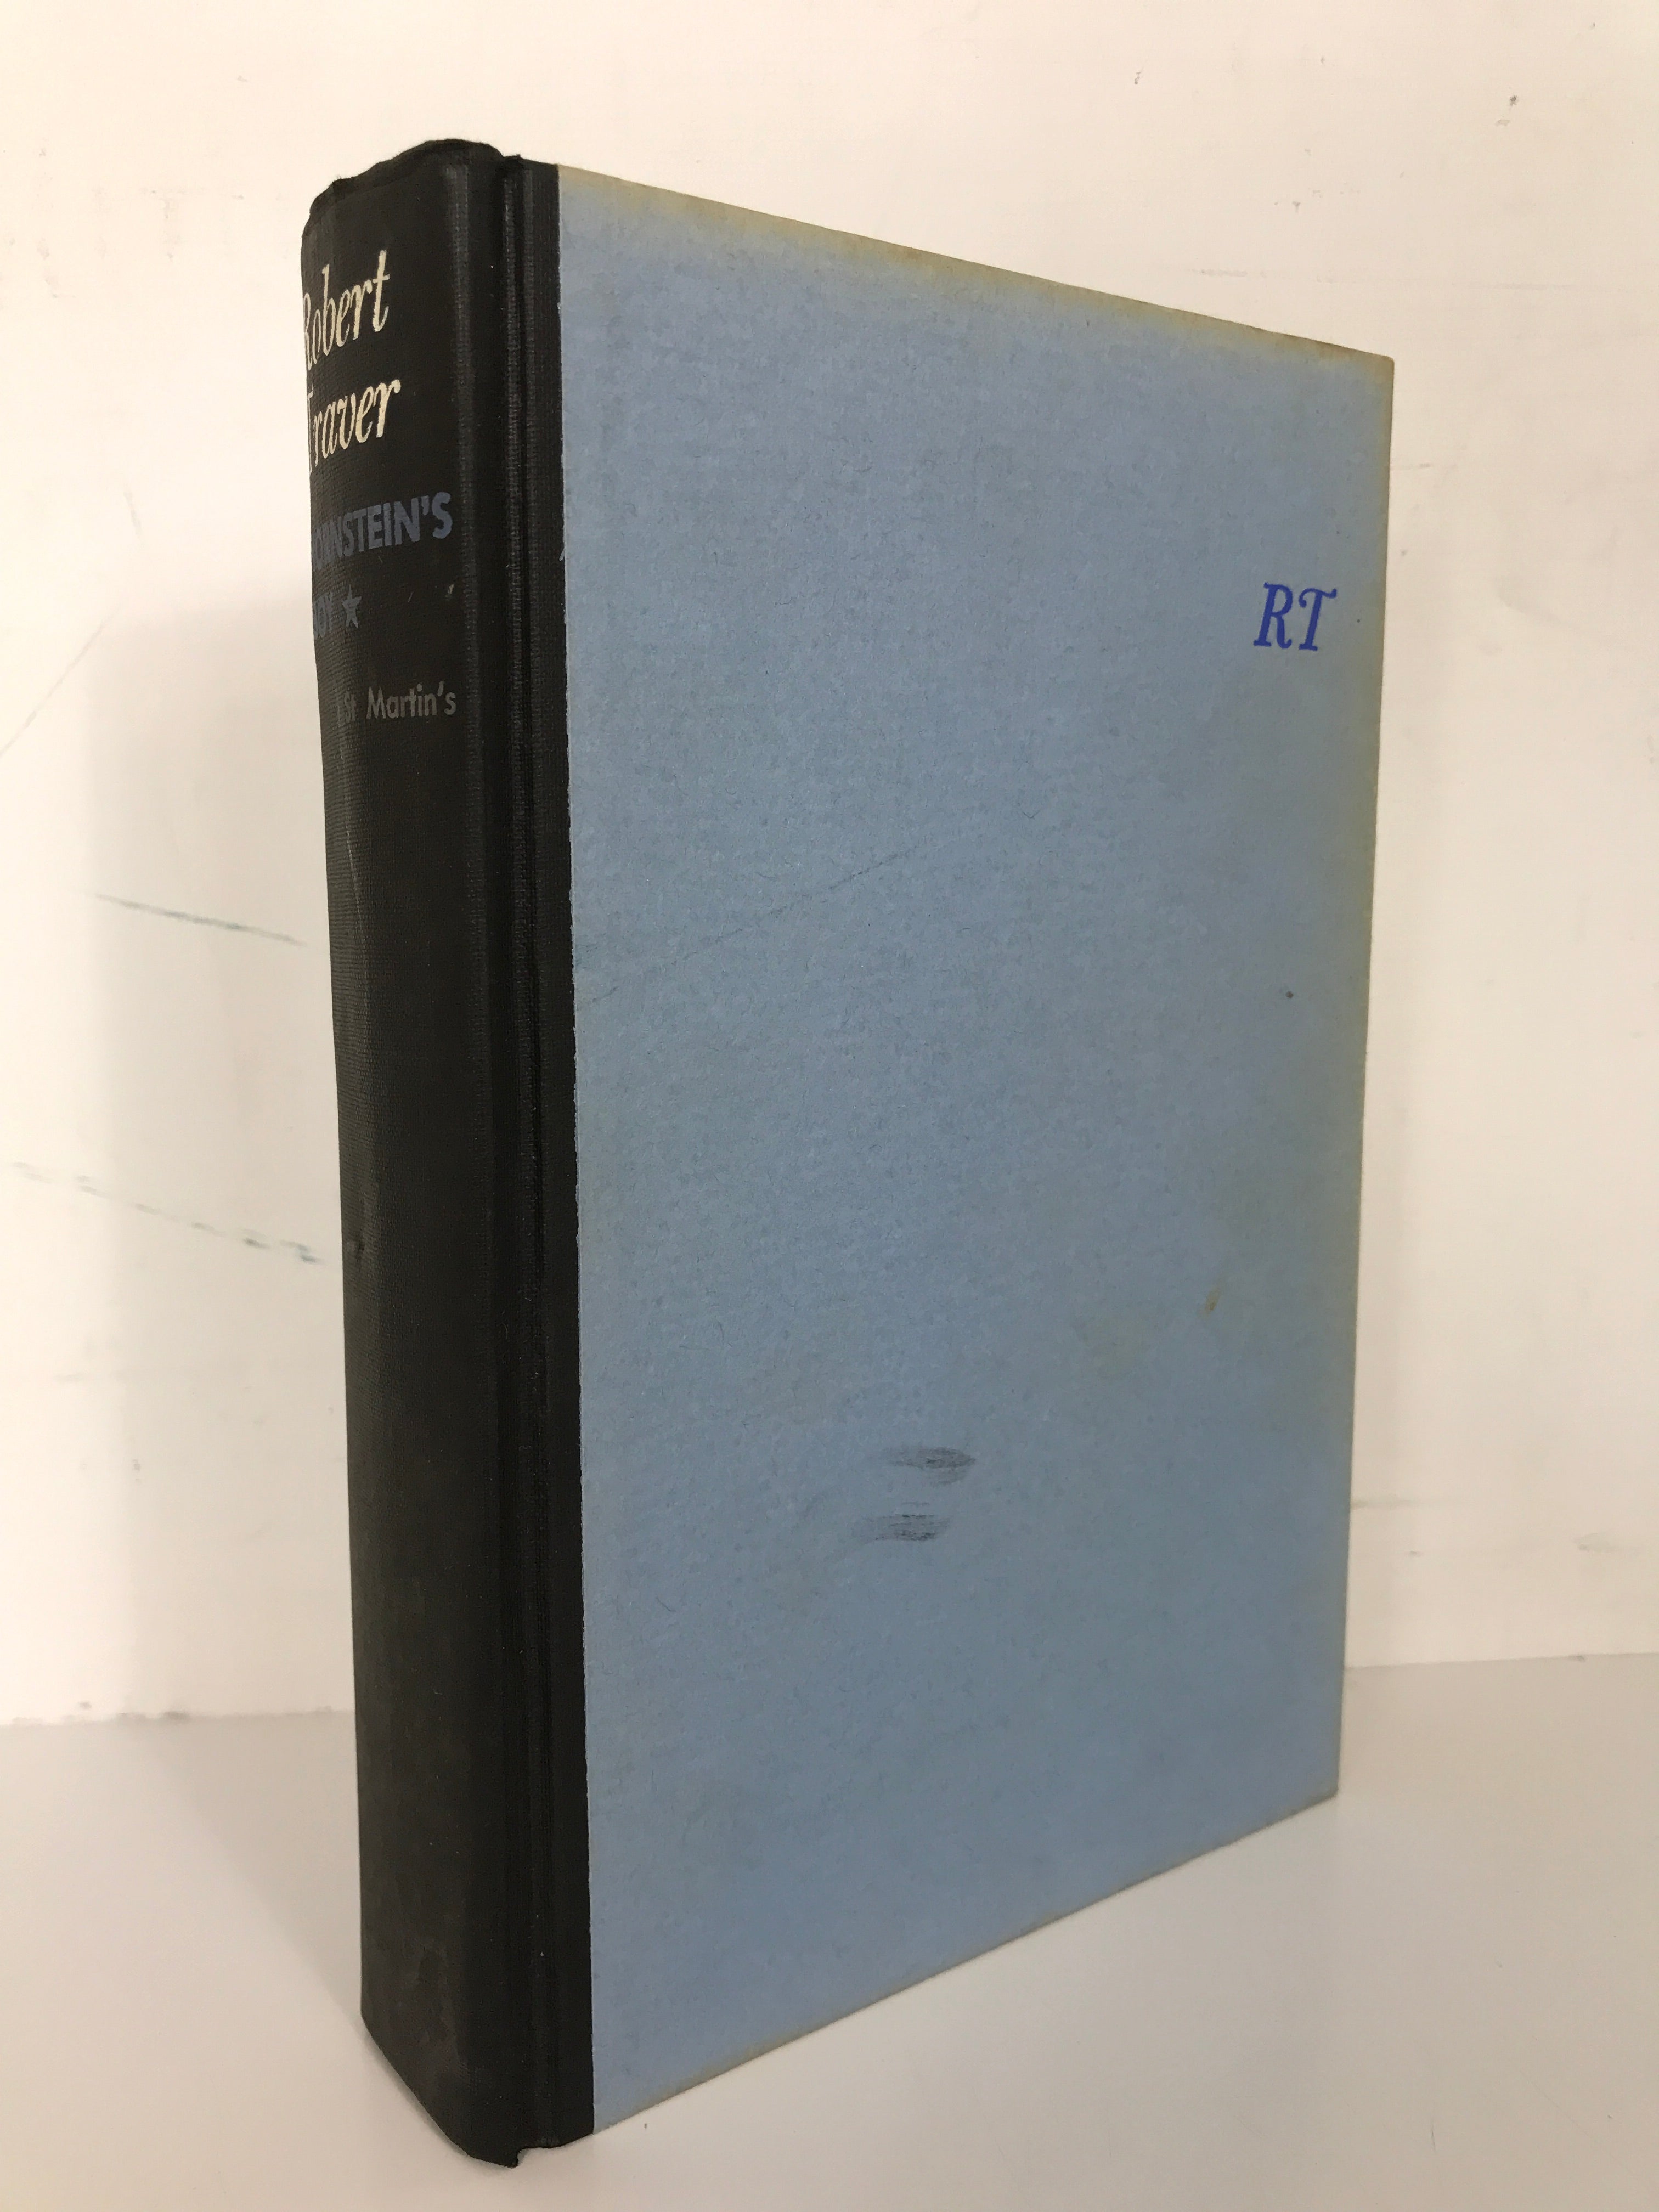 Hornstein's Boy by Robert Traver First Edition First Printing 1962 HC